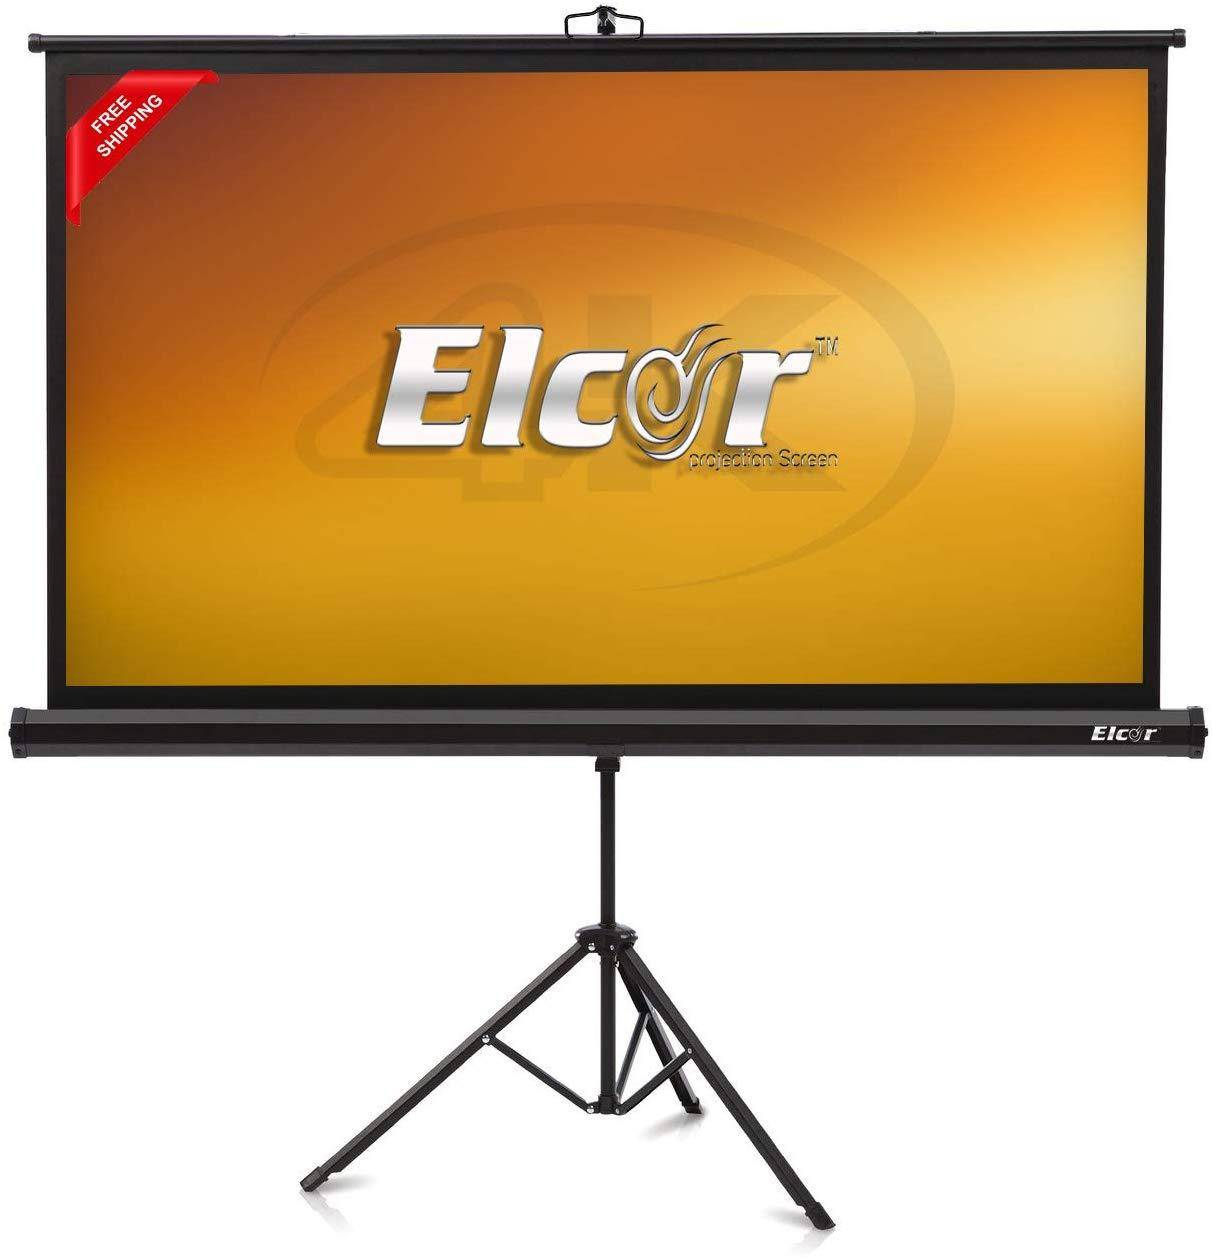 Elcor 4ft X 6 ft 84 inch diagonal 4:3 Aspect Ratio Tripod Projector Screen zoom image